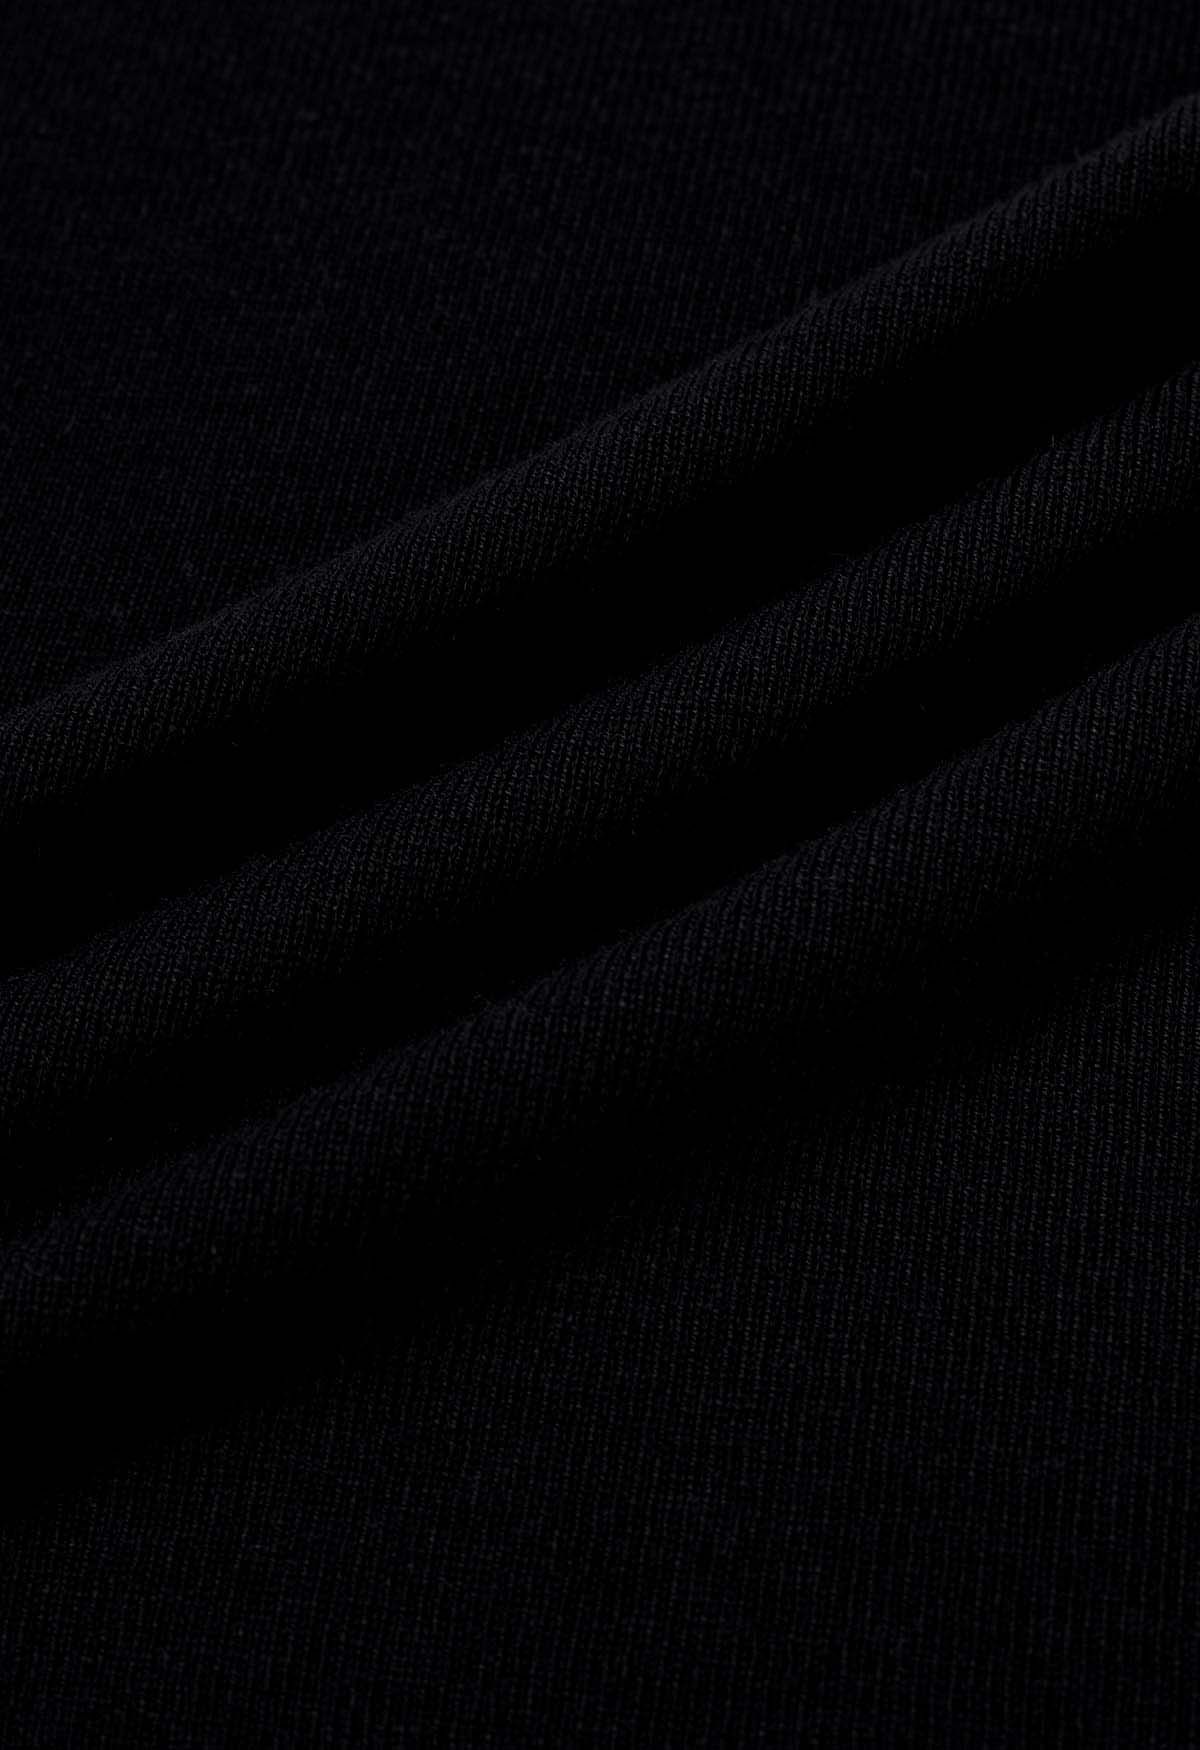 Chic Impression Knit Tank Top in Black